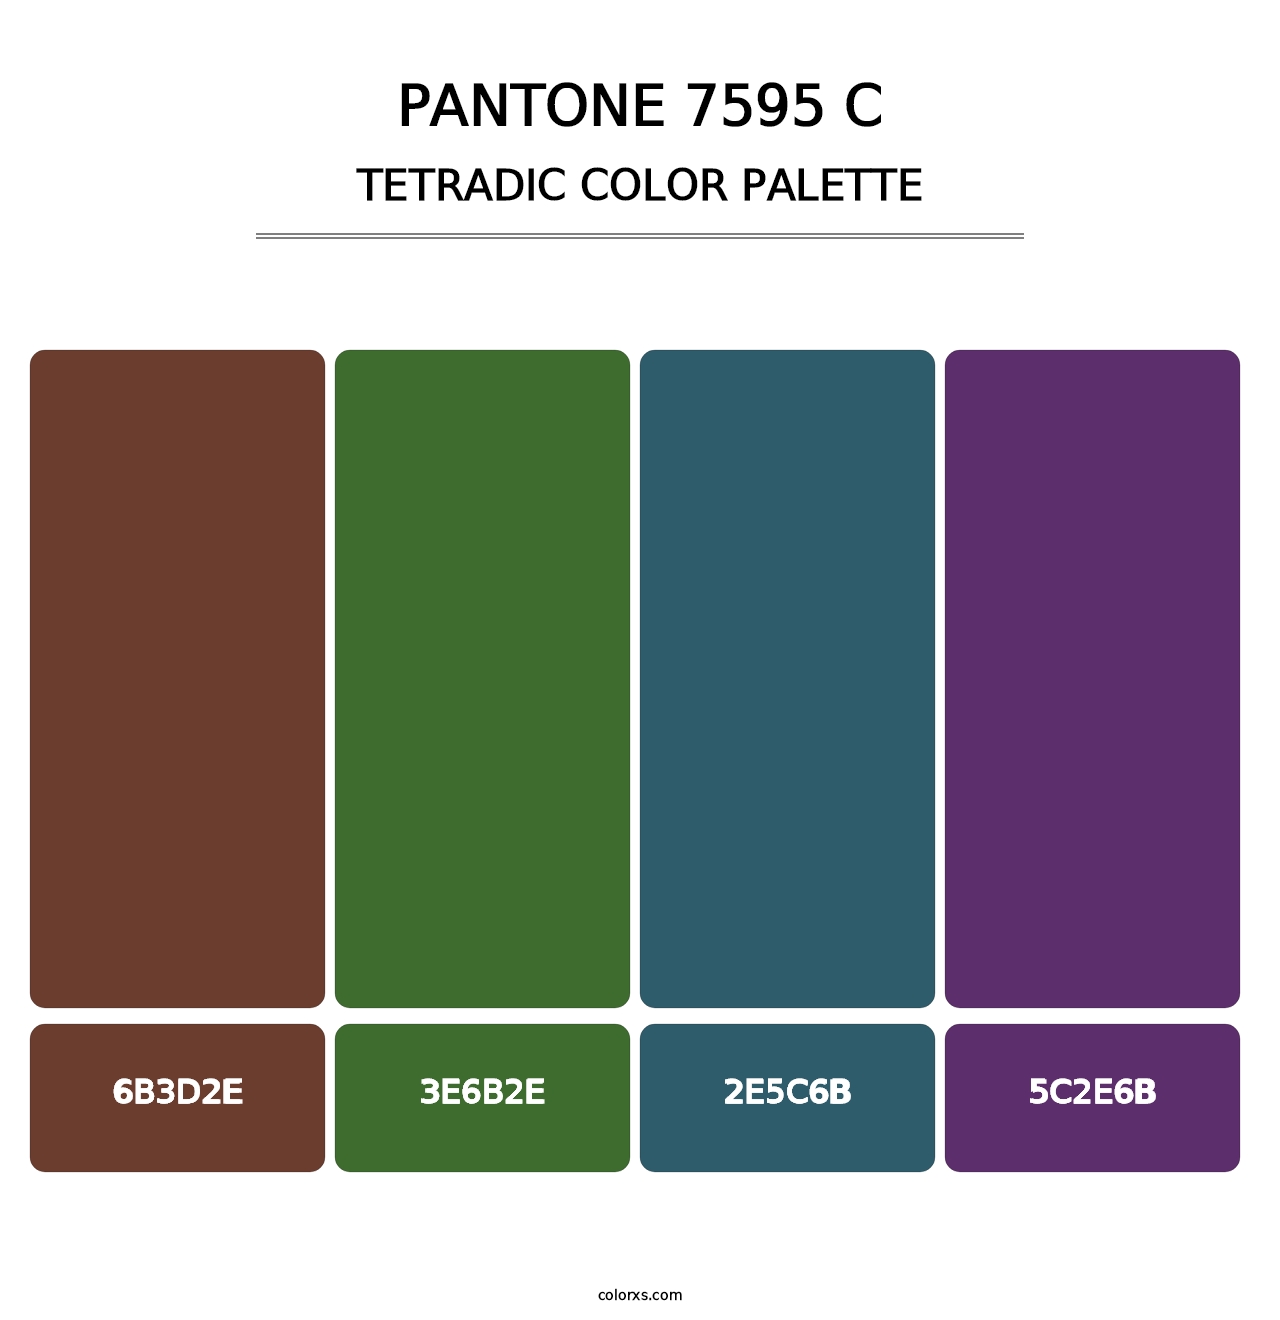 PANTONE 7595 C - Tetradic Color Palette